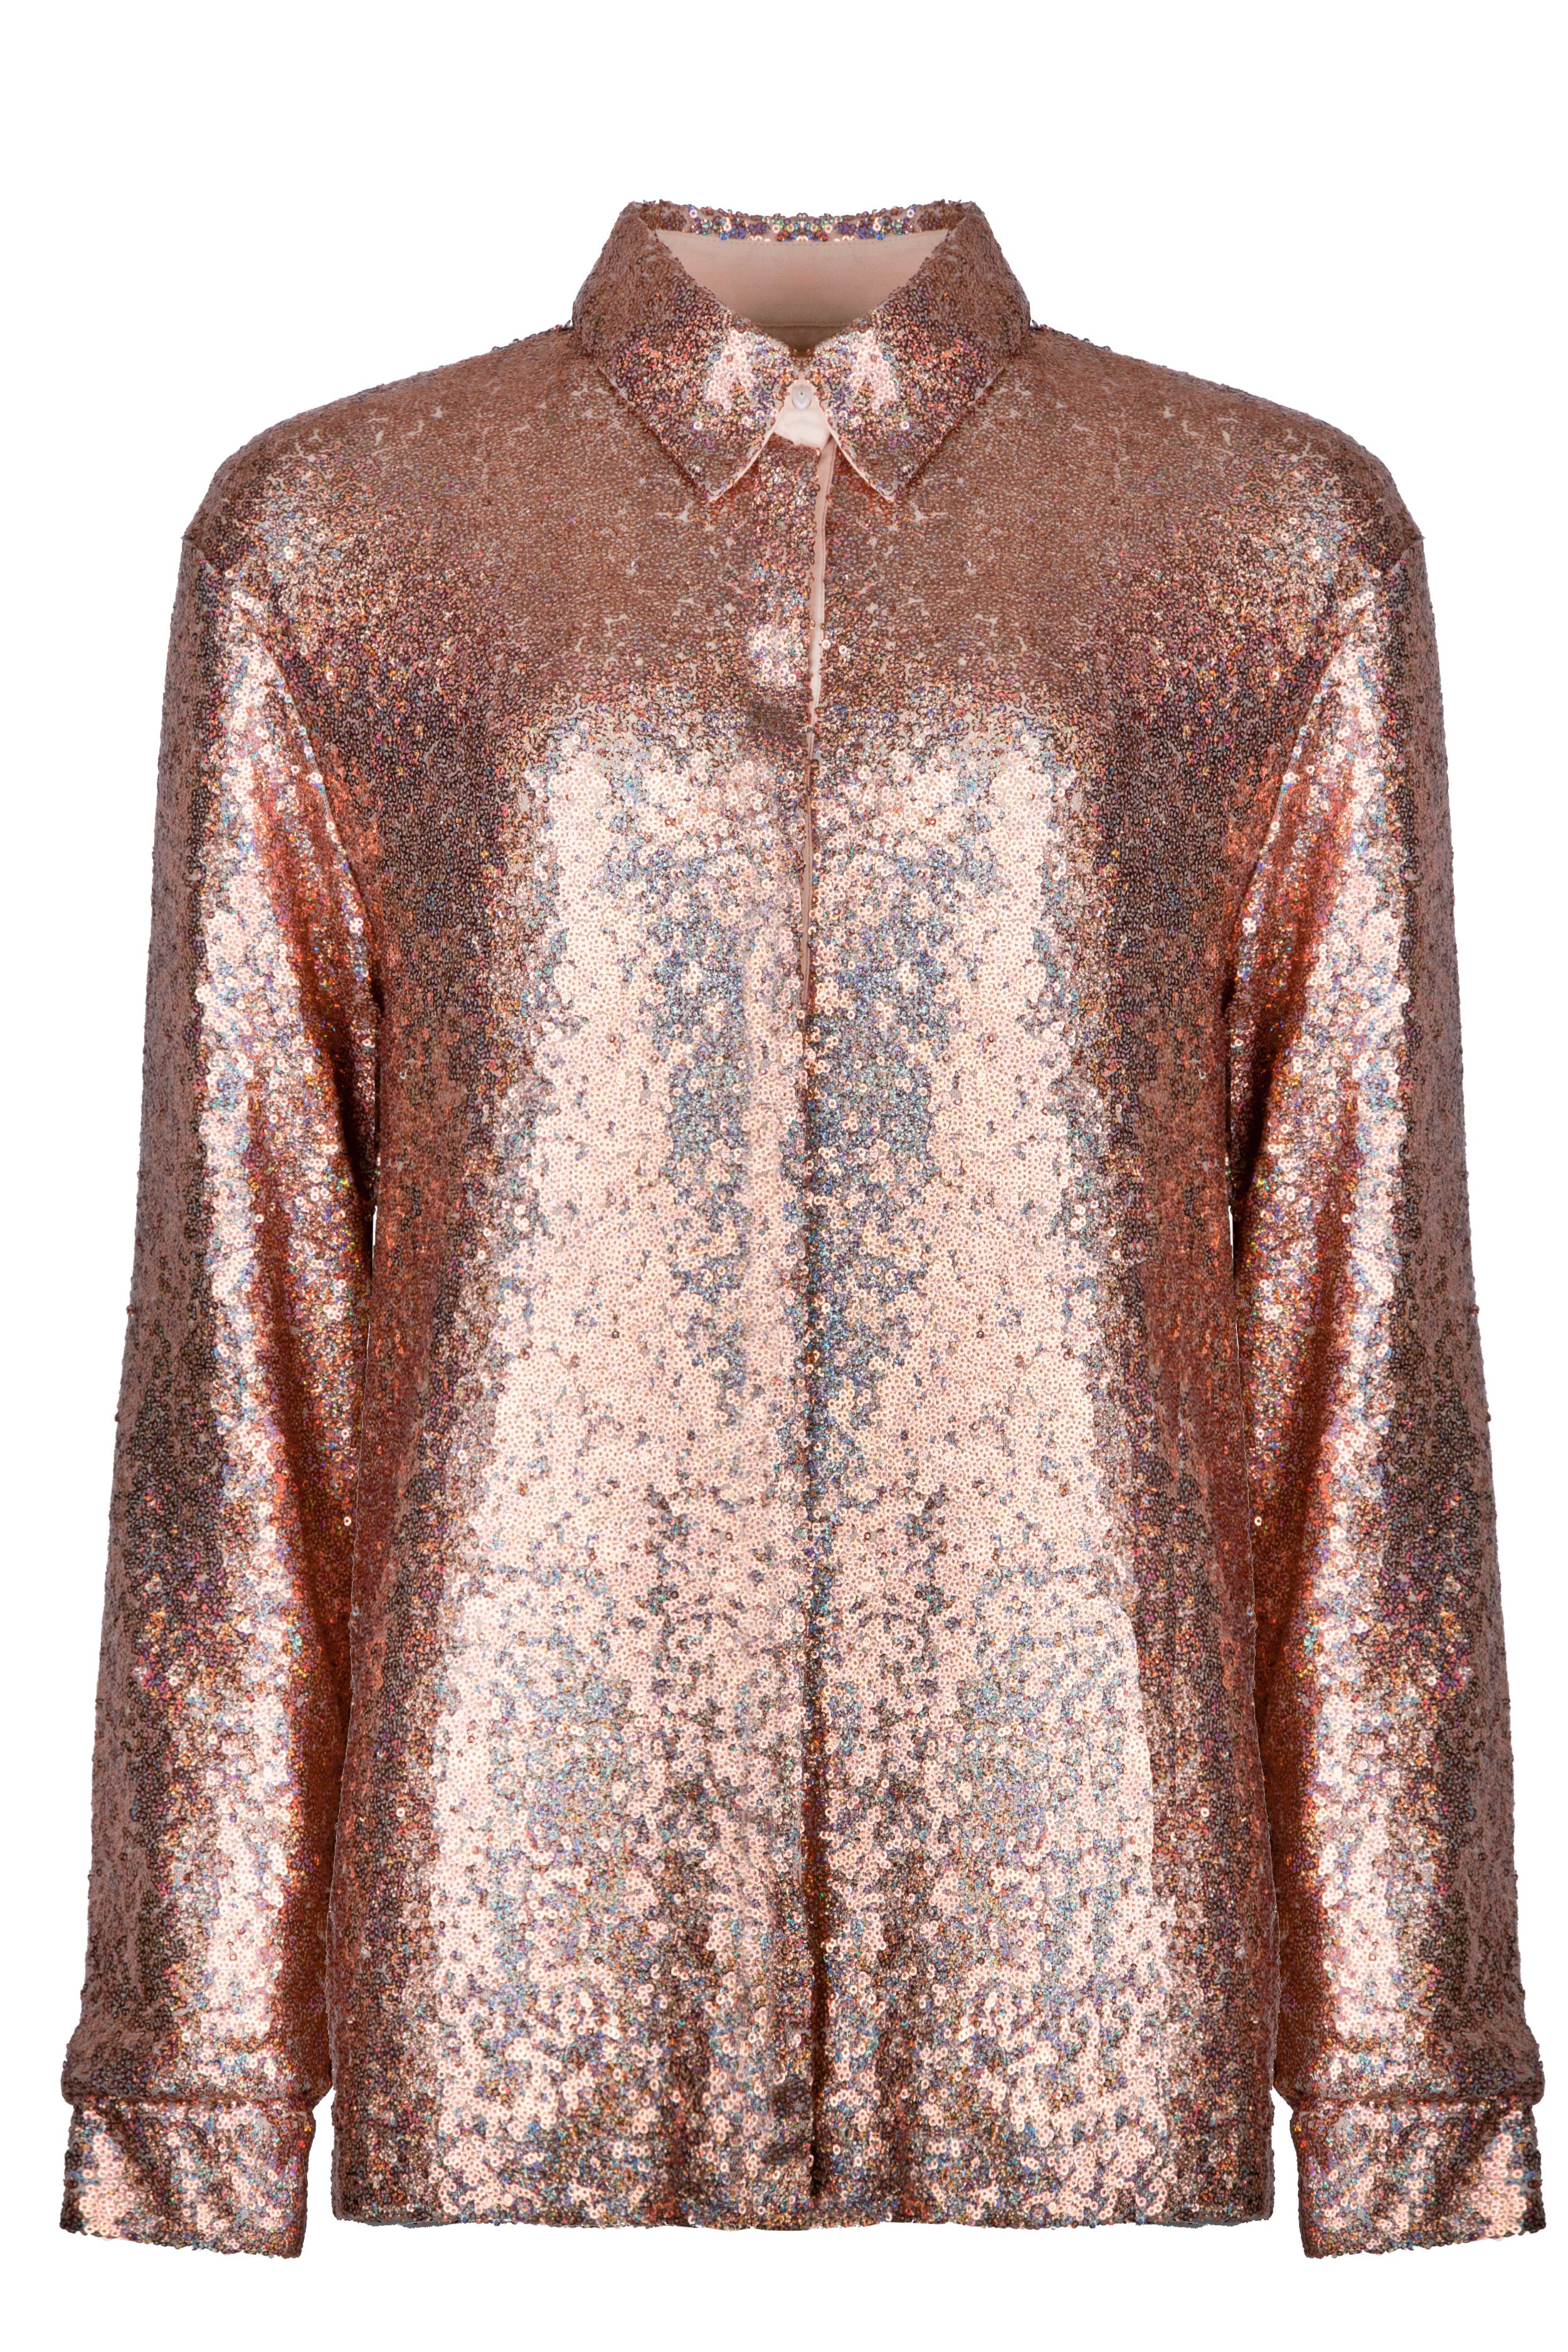 Lyst - Jaded London Rose Gold Sequin Shirt in Metallic